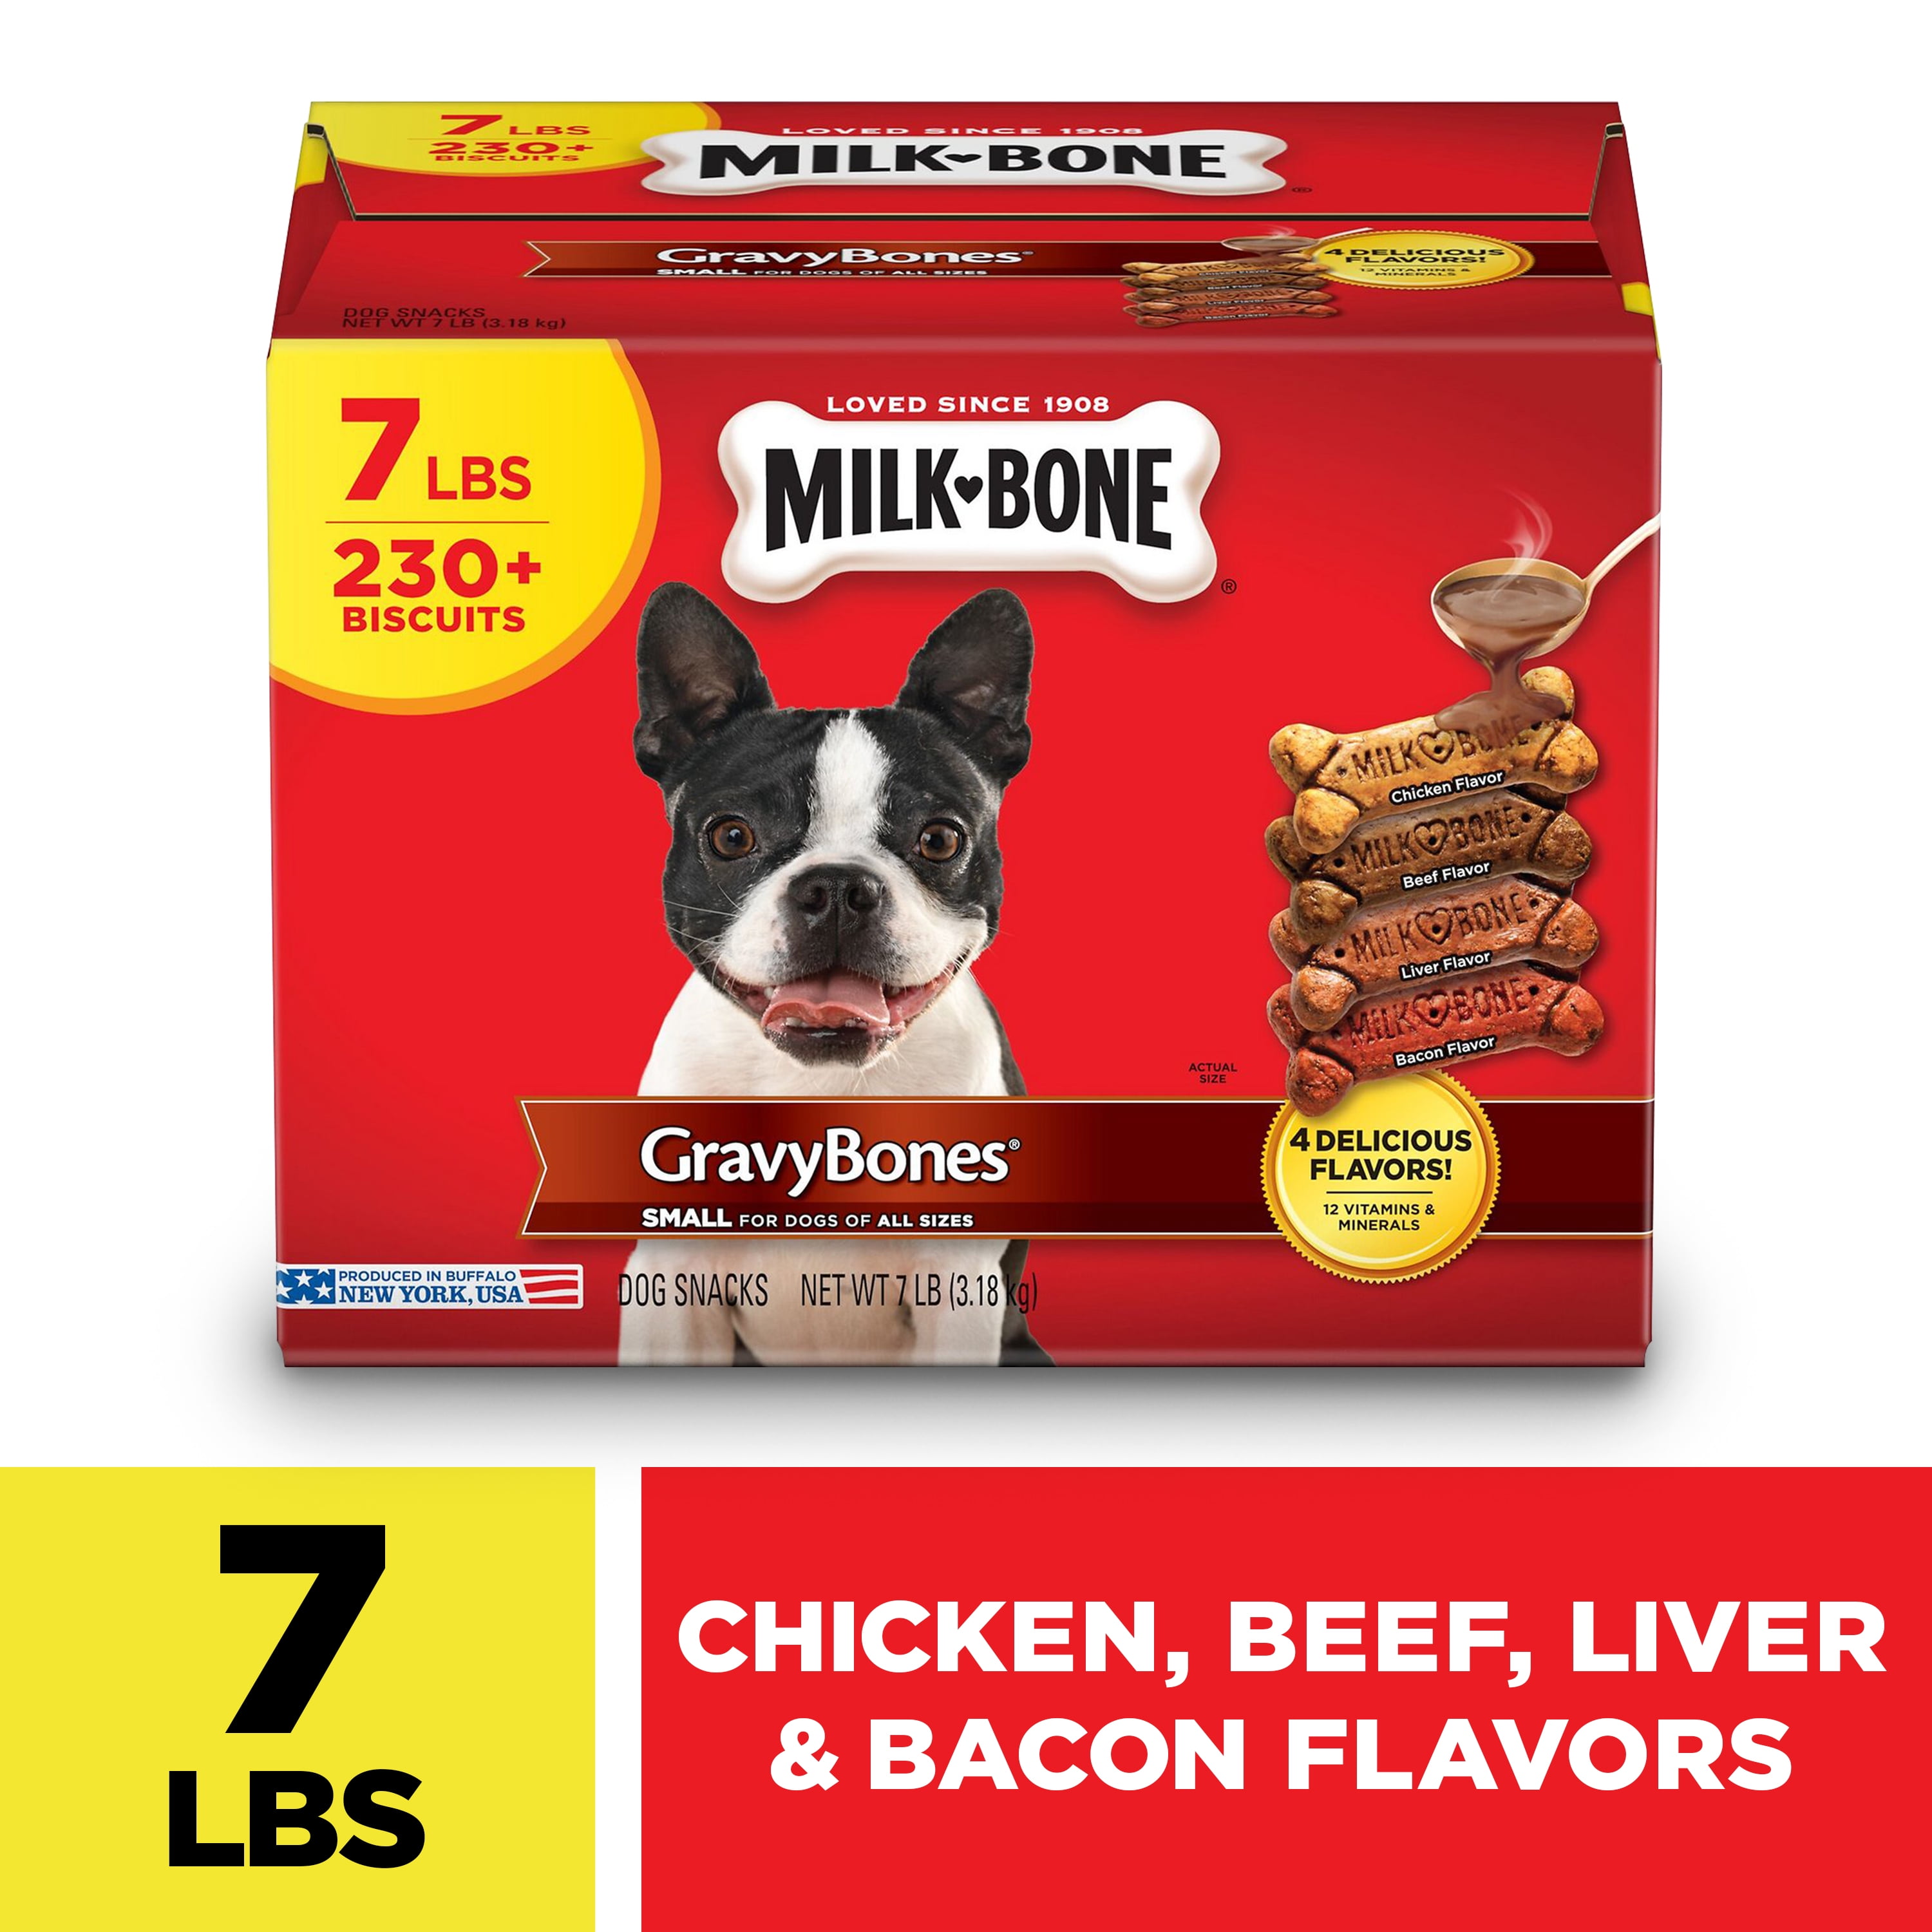 MilkBone GravyBones Small Biscuit Dog Treats, 7lb box